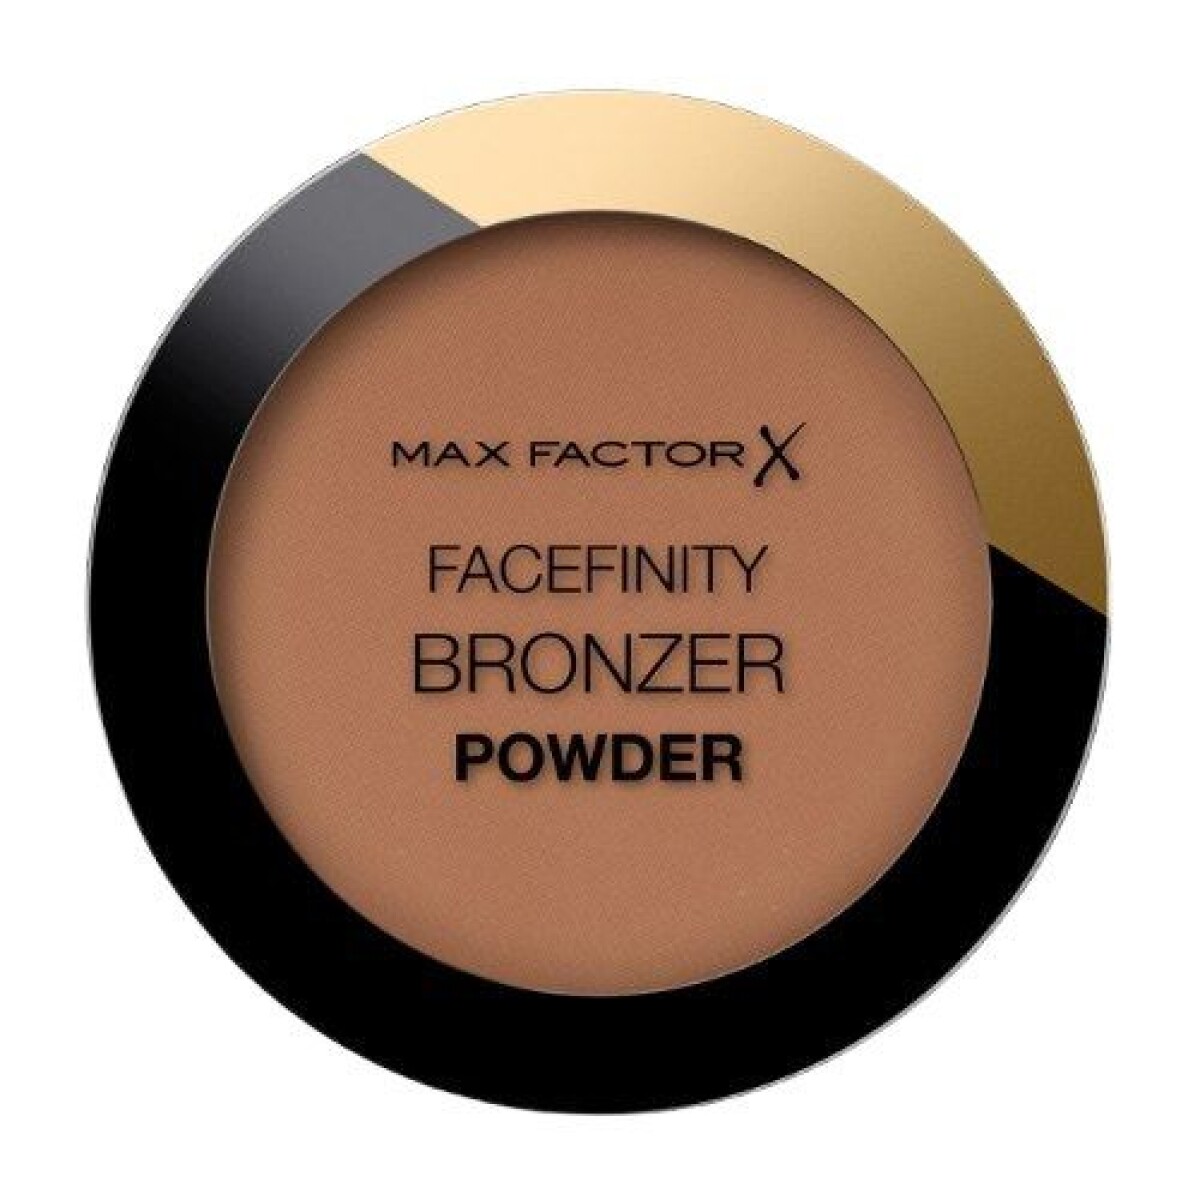 Max Factor Facefinity Bronzer Powder 01 Light Bronze 